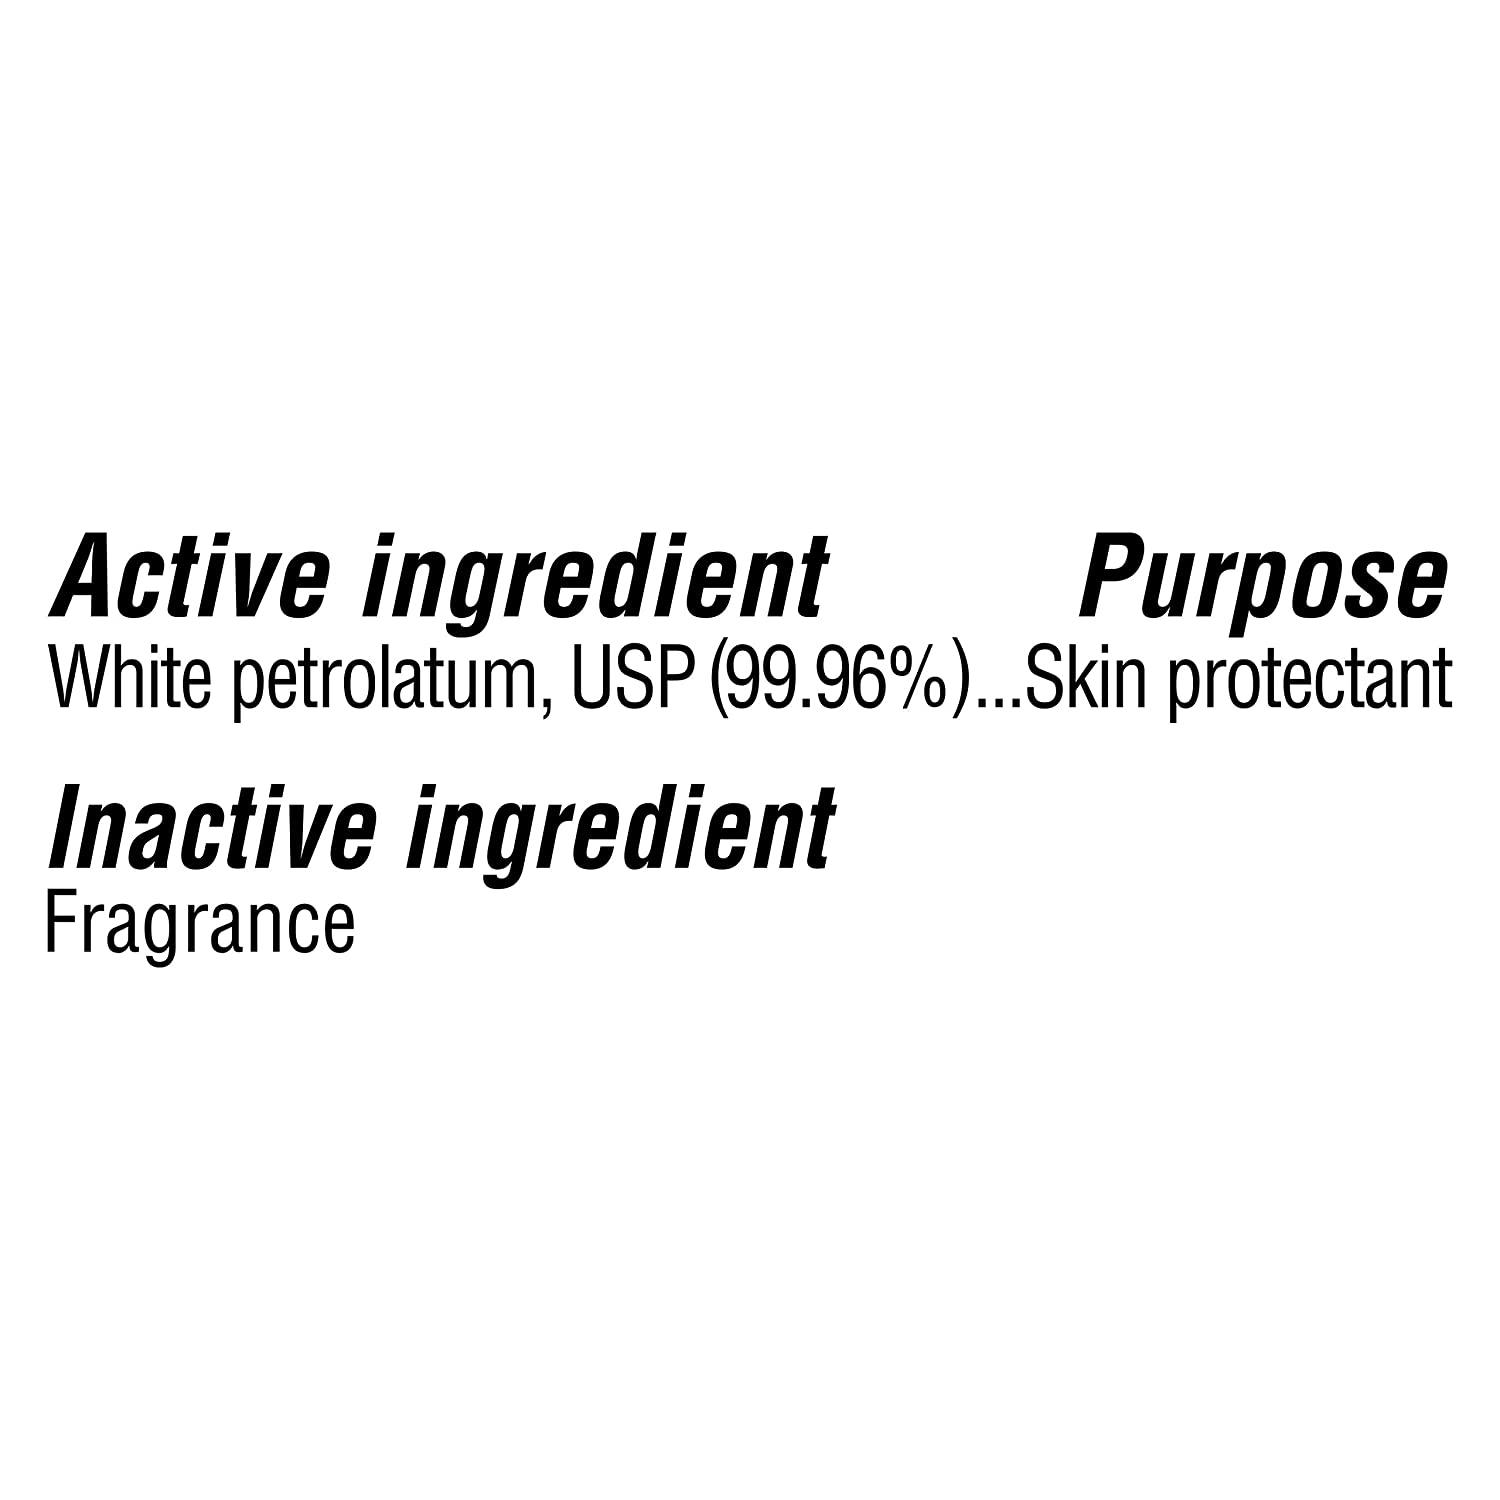 Vaseline Healing Jelly Petroleum Jelly For Diaper Rash Moisturizer For Baby  Hypoallergenic Skin Protectant 2.89 oz